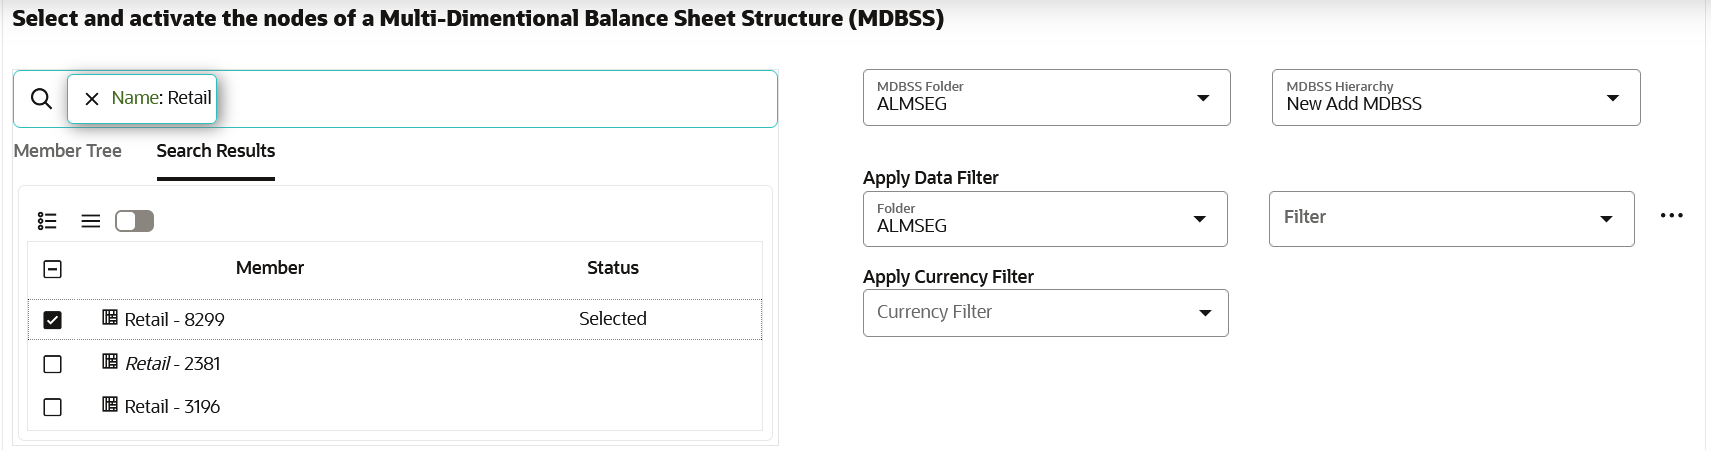 Data Source details of Balance Sheet Selection